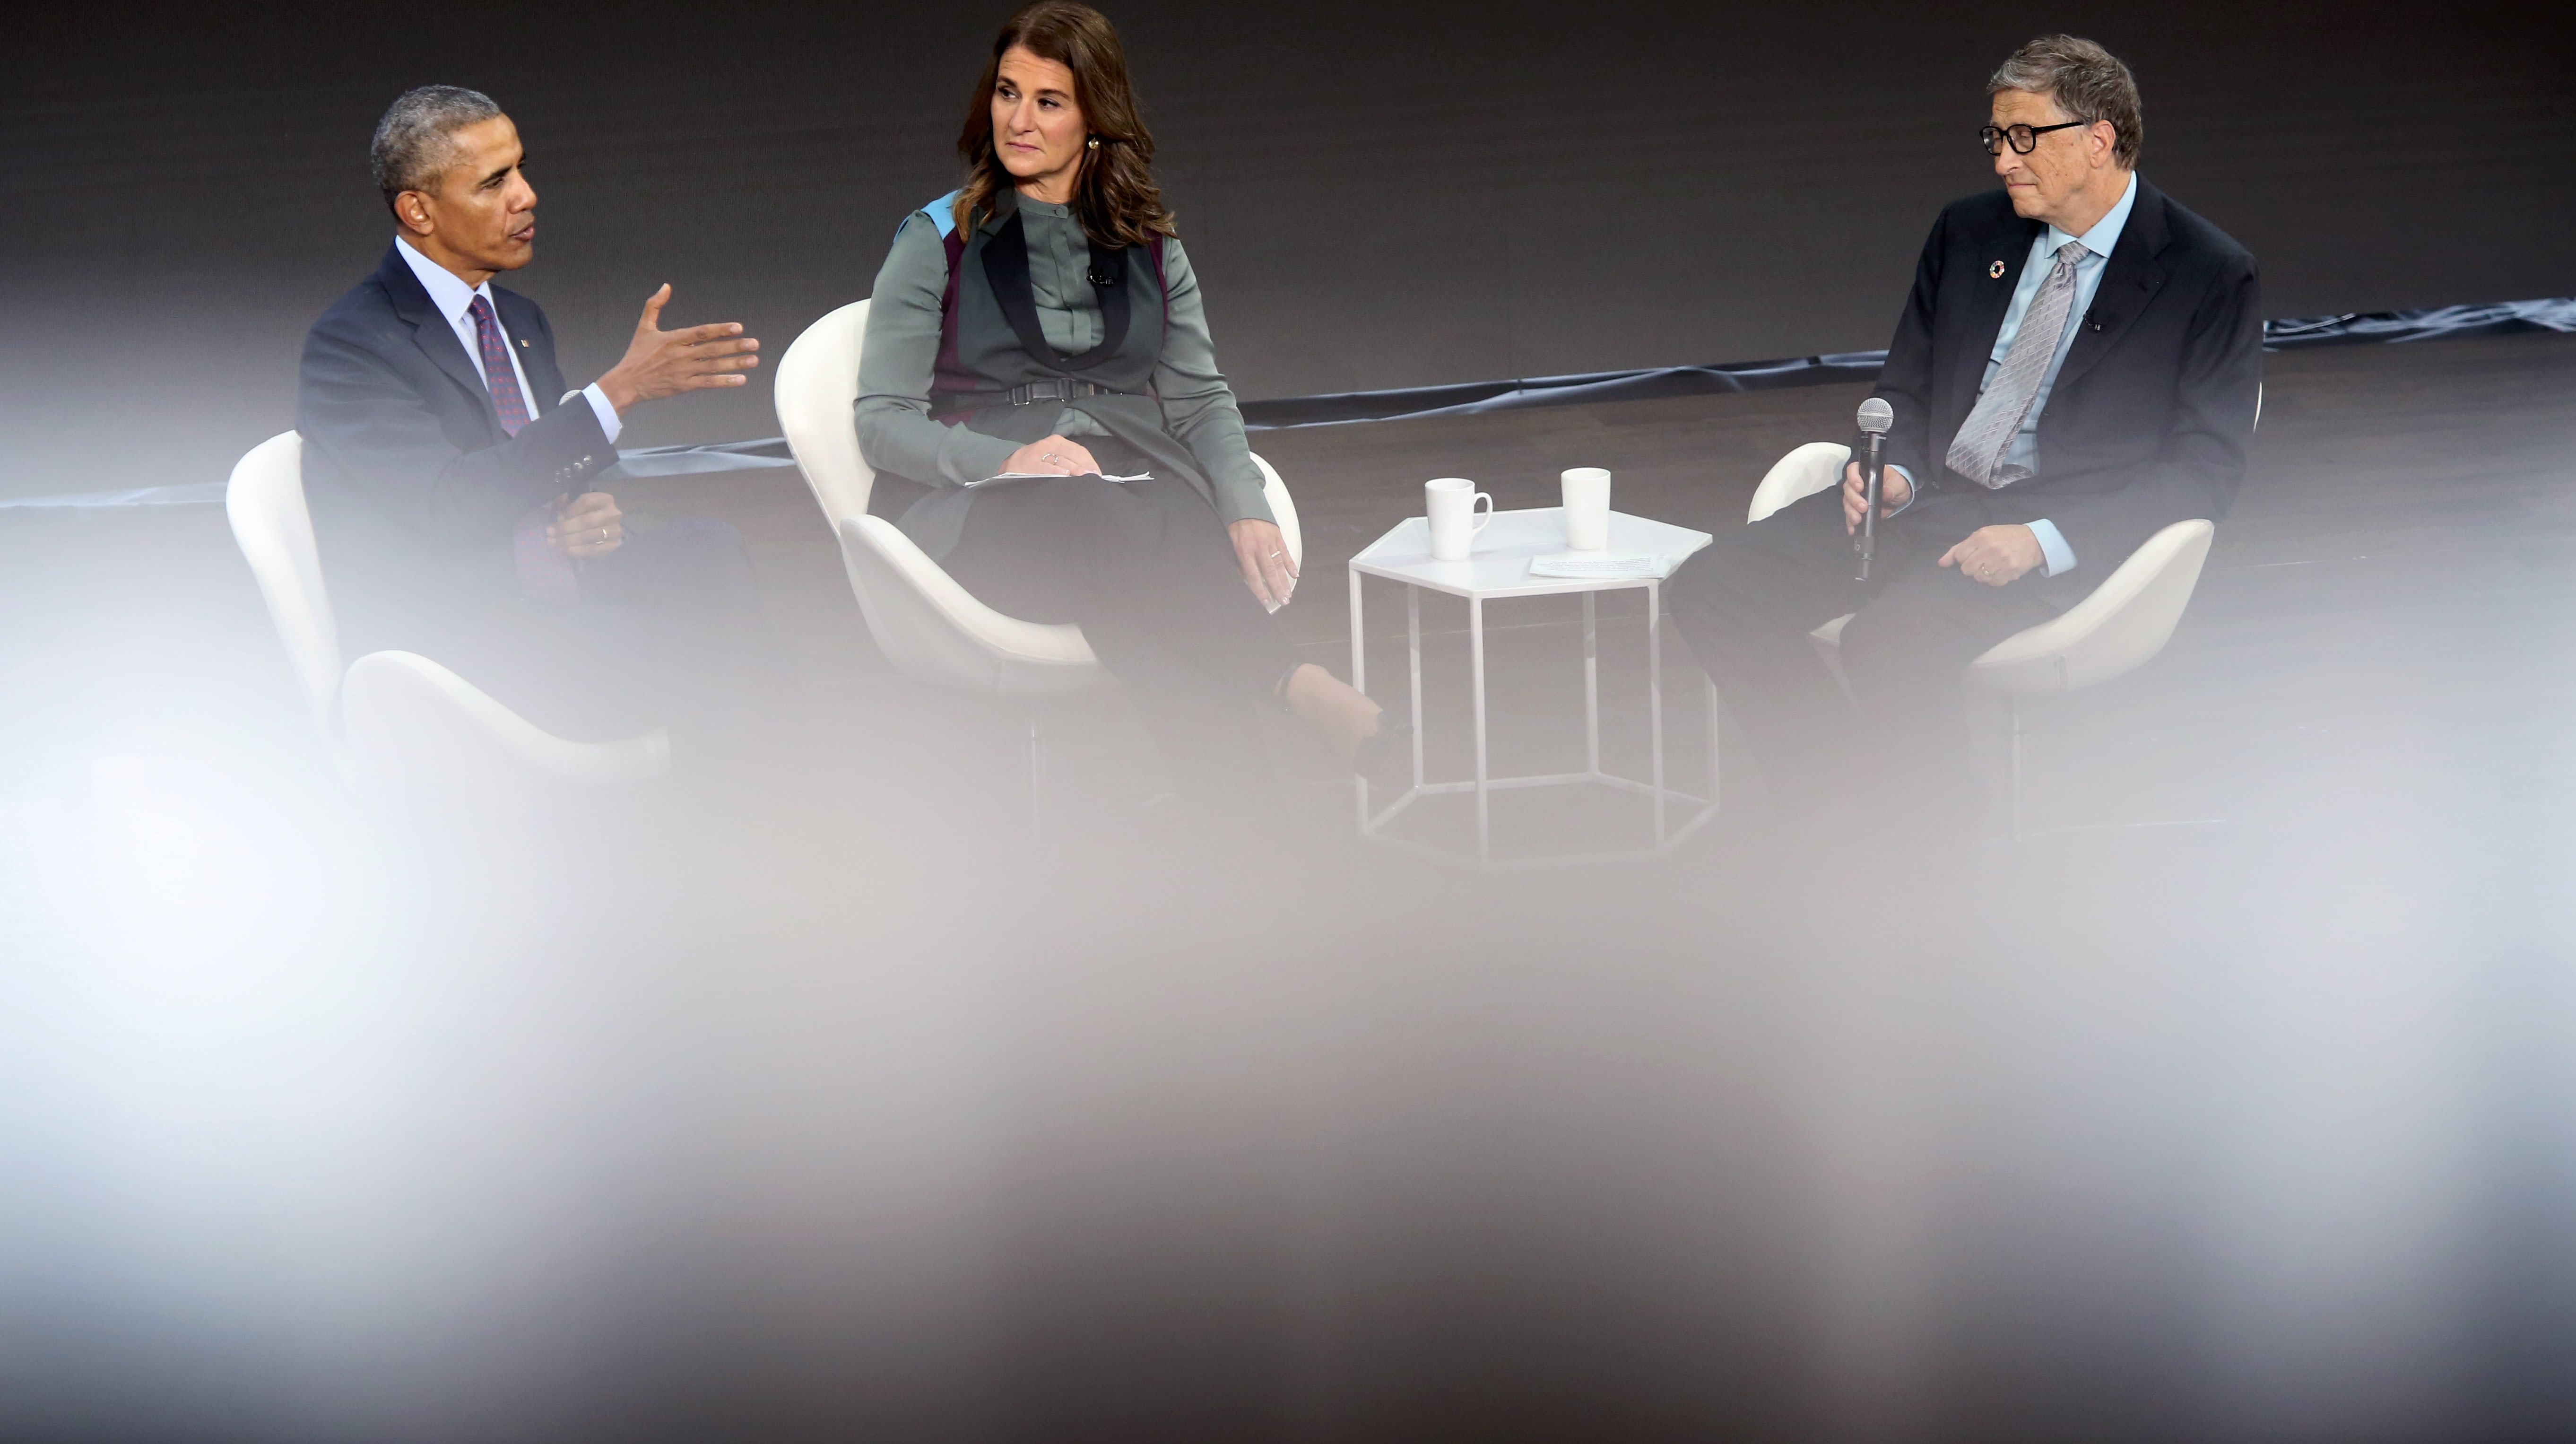 Former US President Barack Obama with Melinda and Bill Gates, September 2017 (Photo: Yana Paskova/Getty Images)